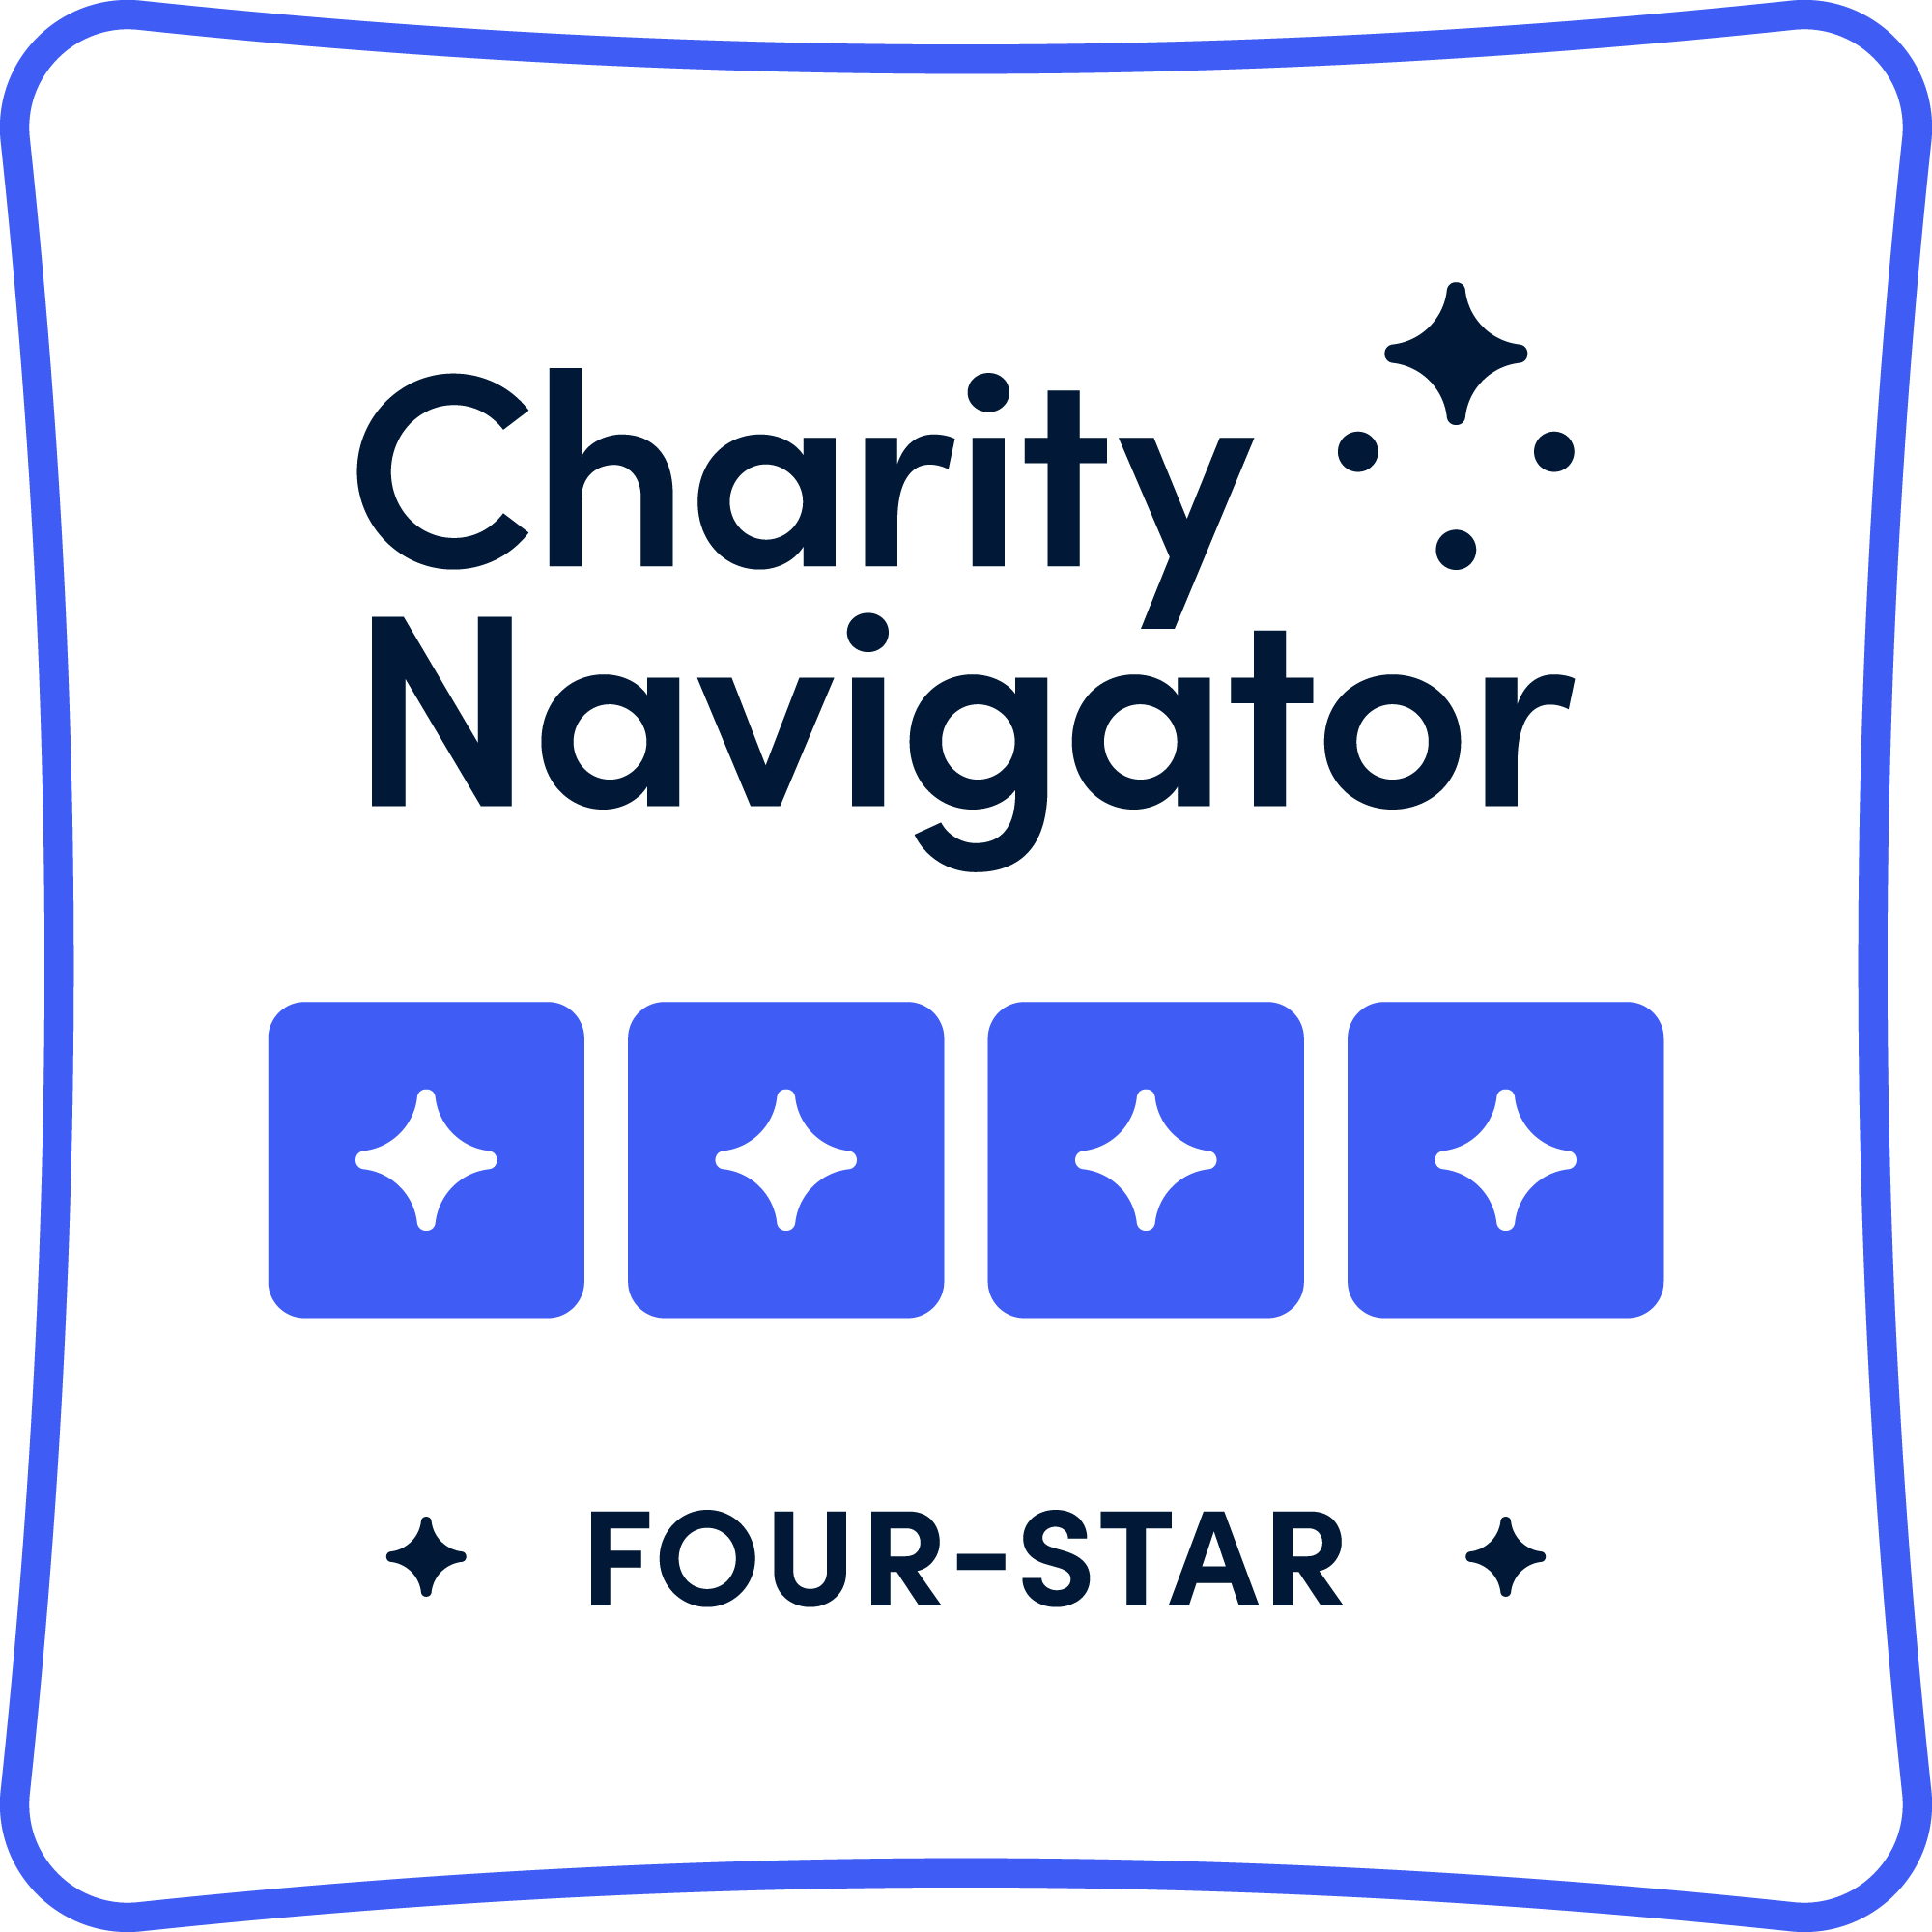 charity navigator - four-star rating badge - full color